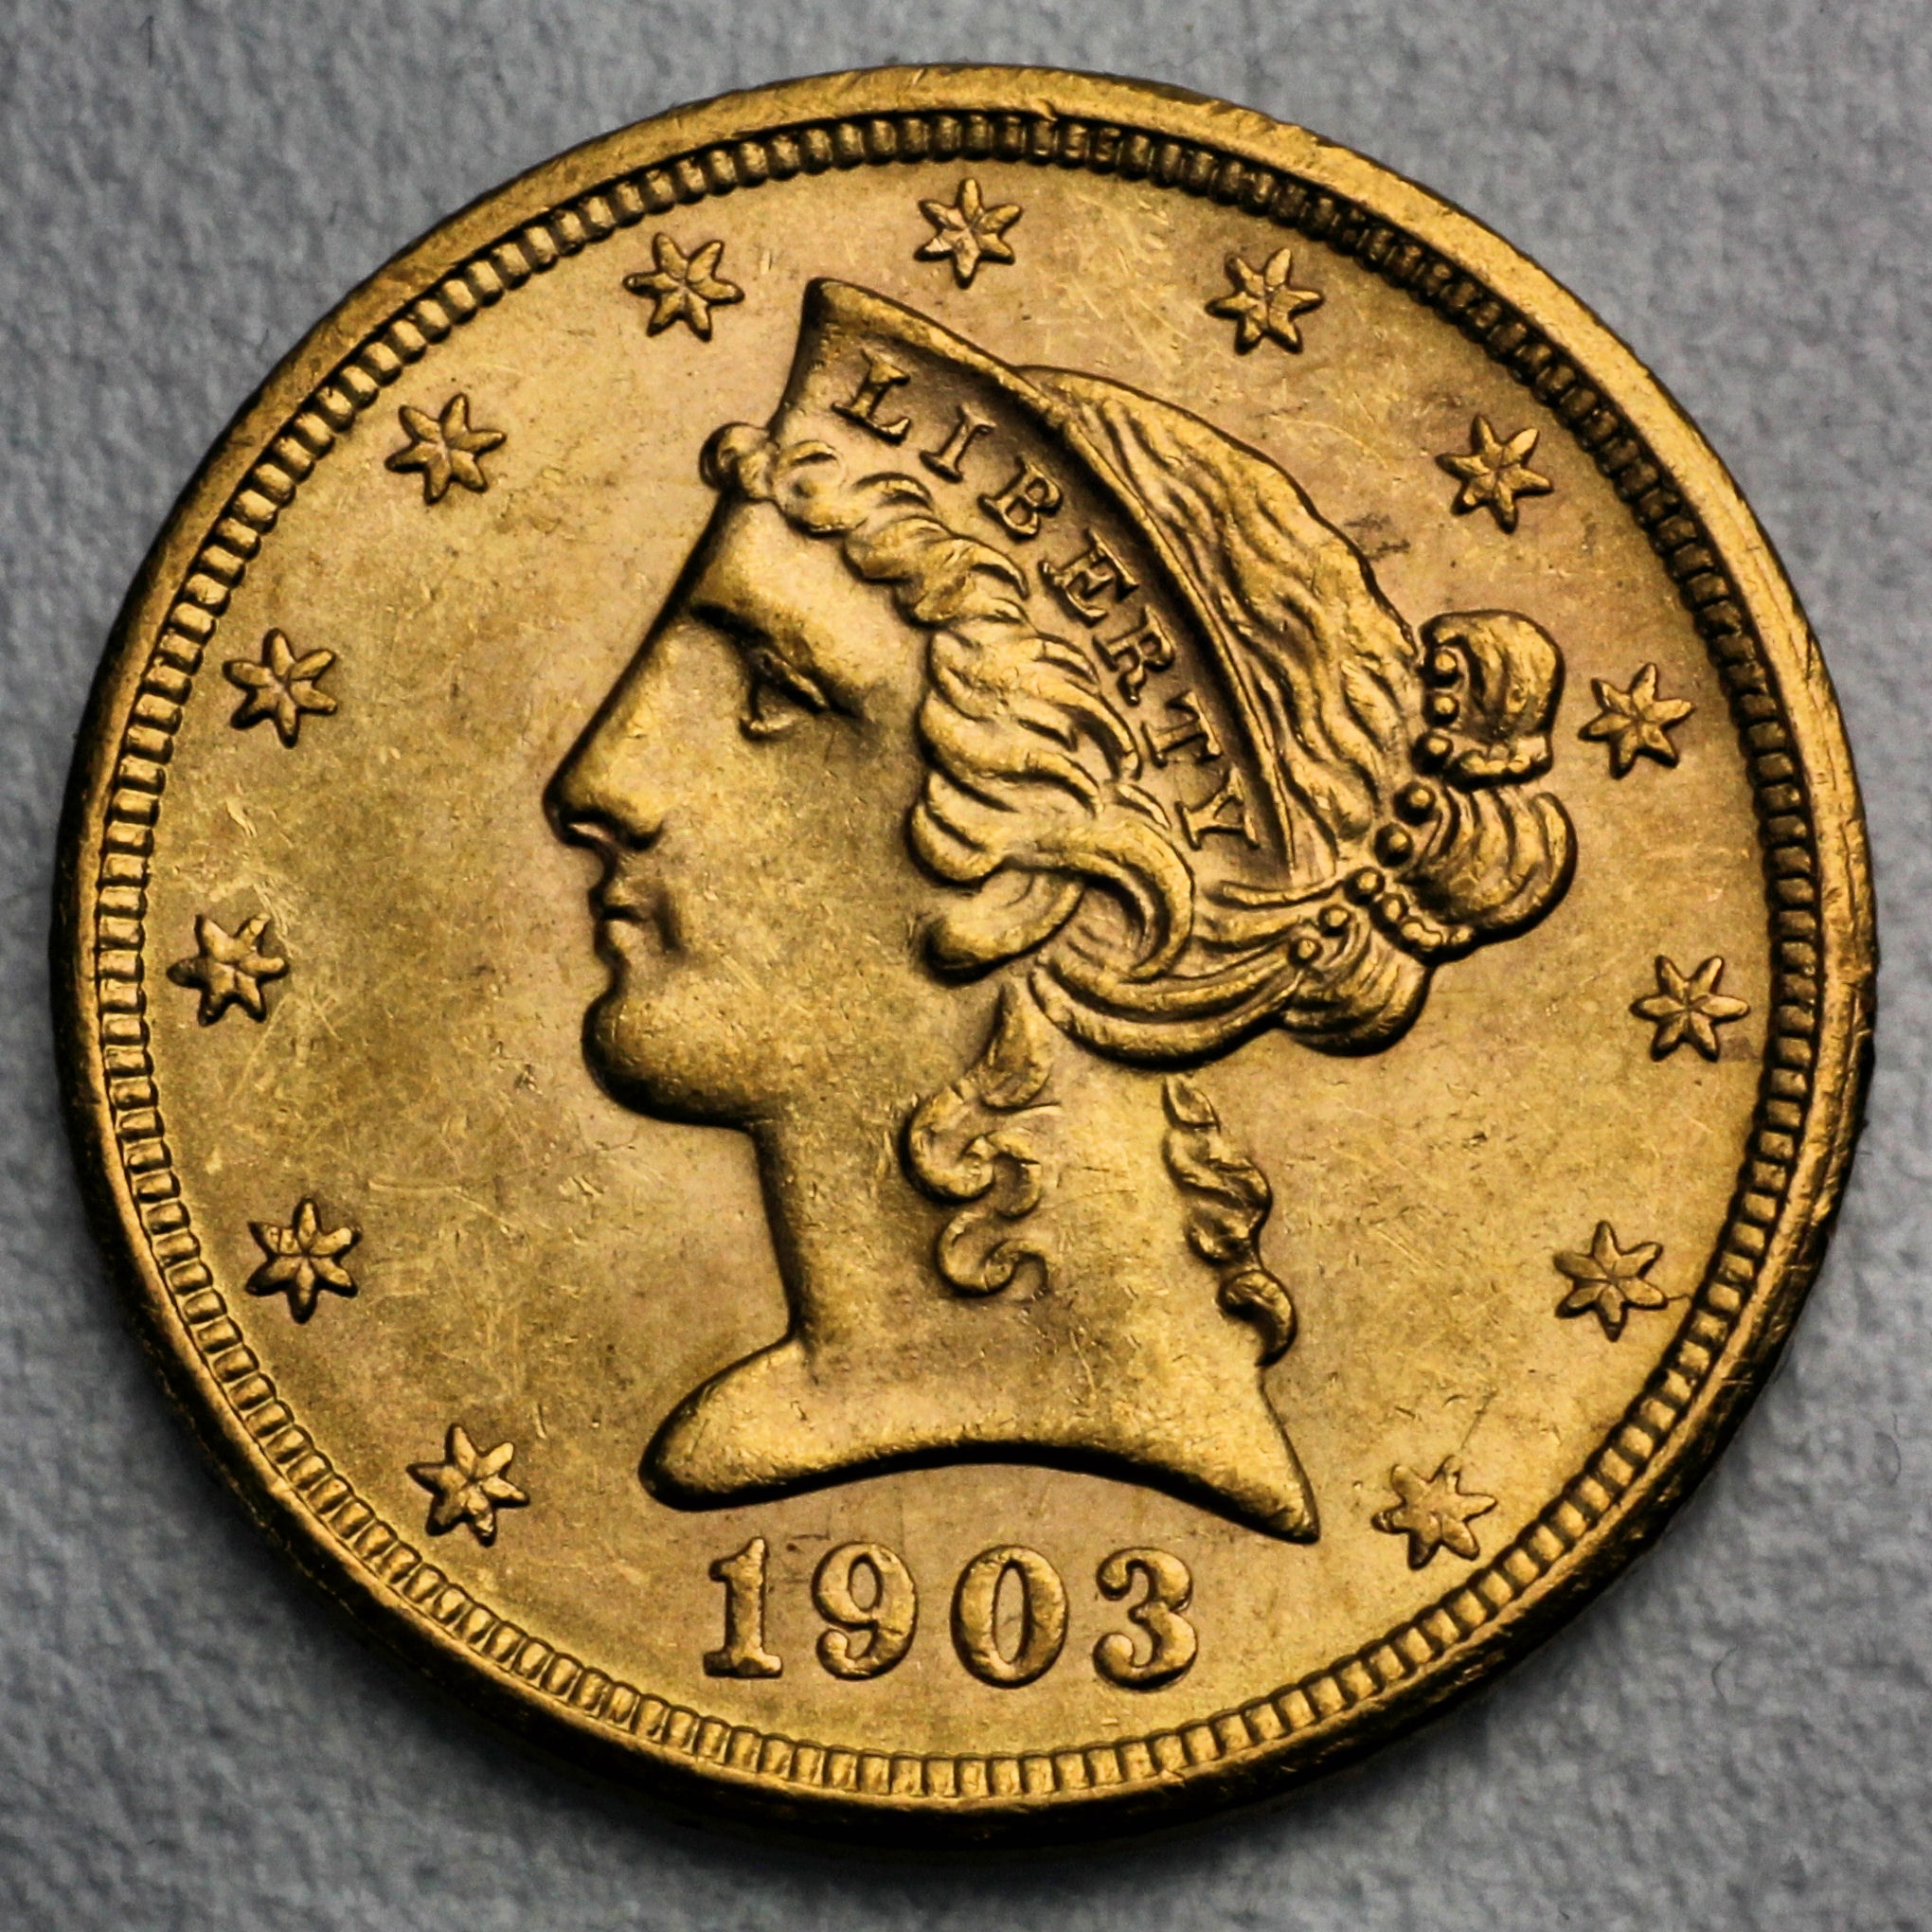 Goldmünze 5 Dollars - Liberty Half Eagle (USA)